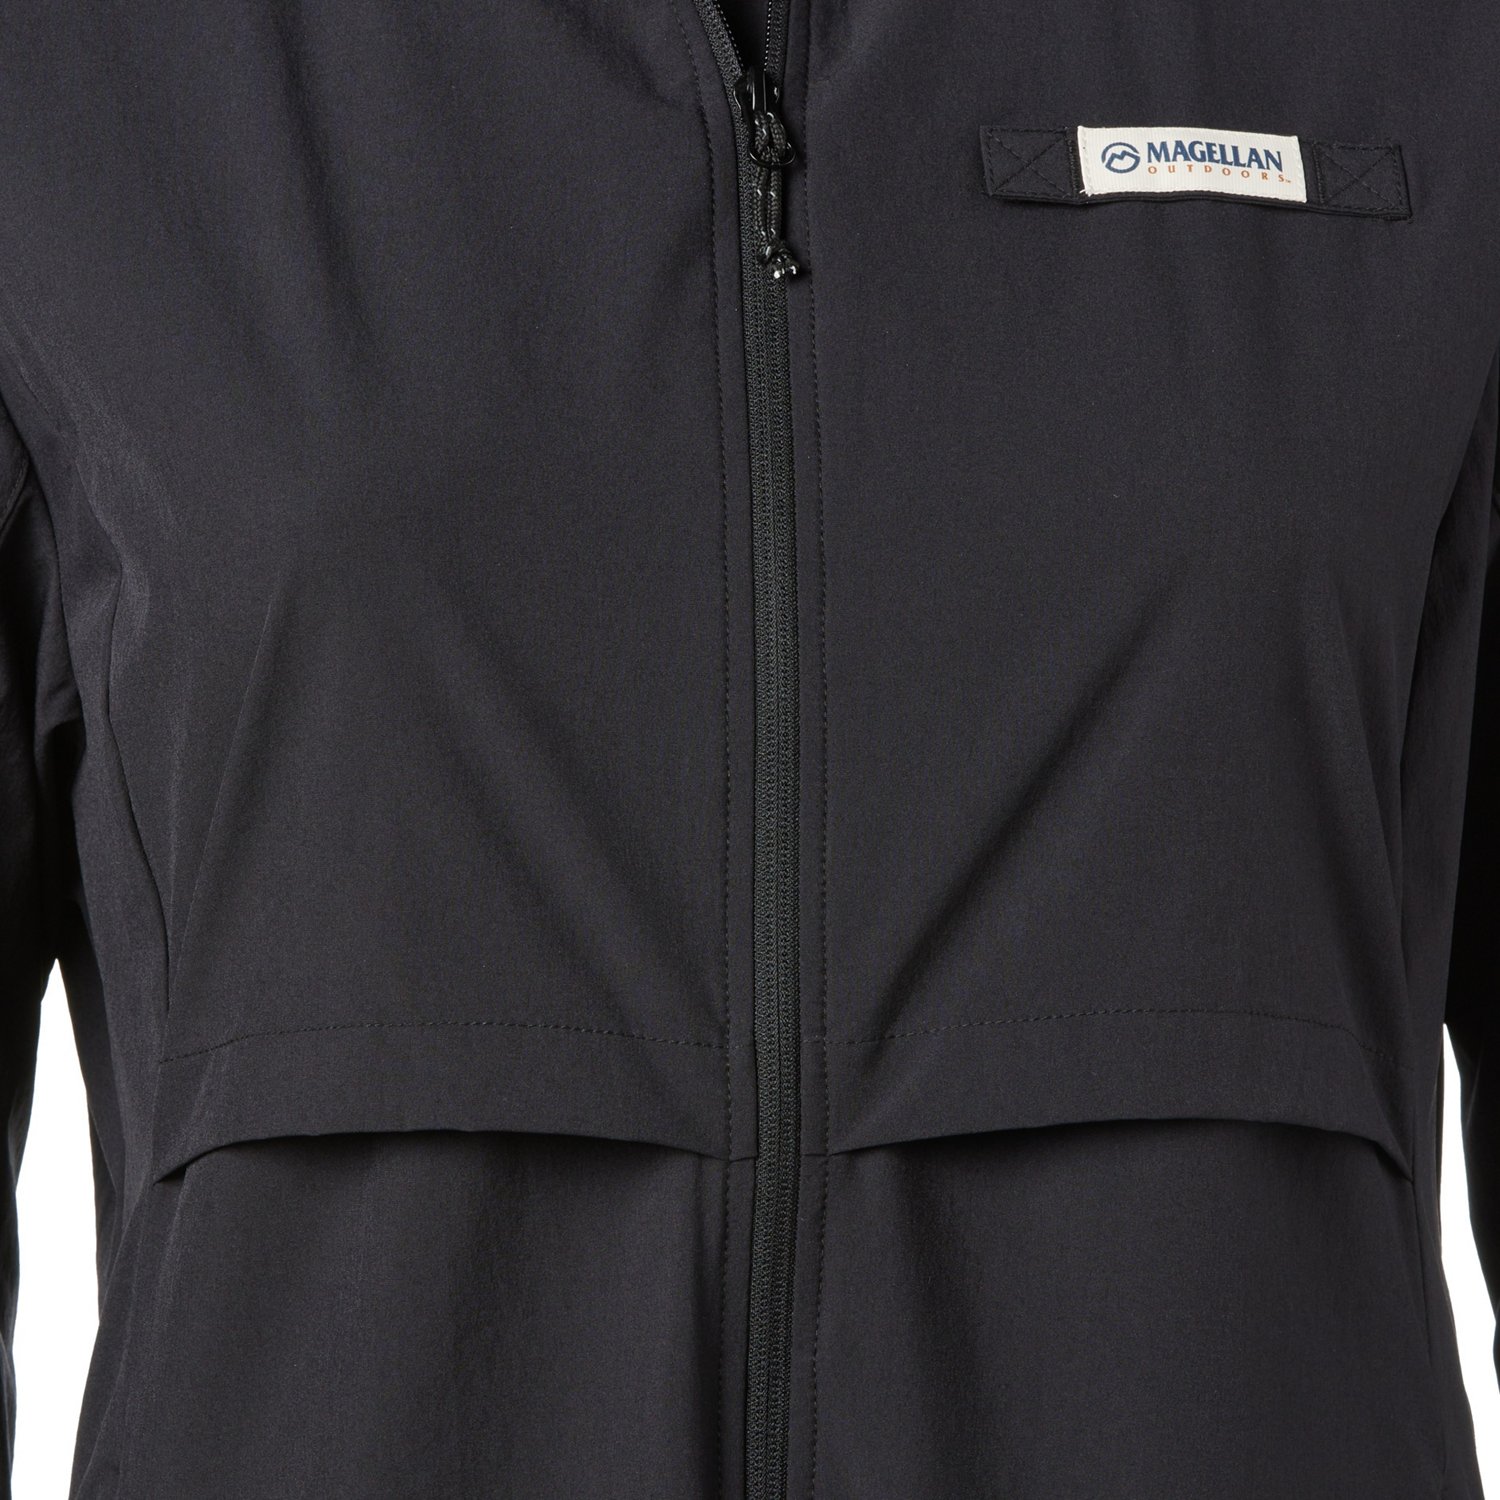 Academy Sports + Outdoors Magellan Outdoors Women's Overcast Plus Fishing  Windbreaker Jacket